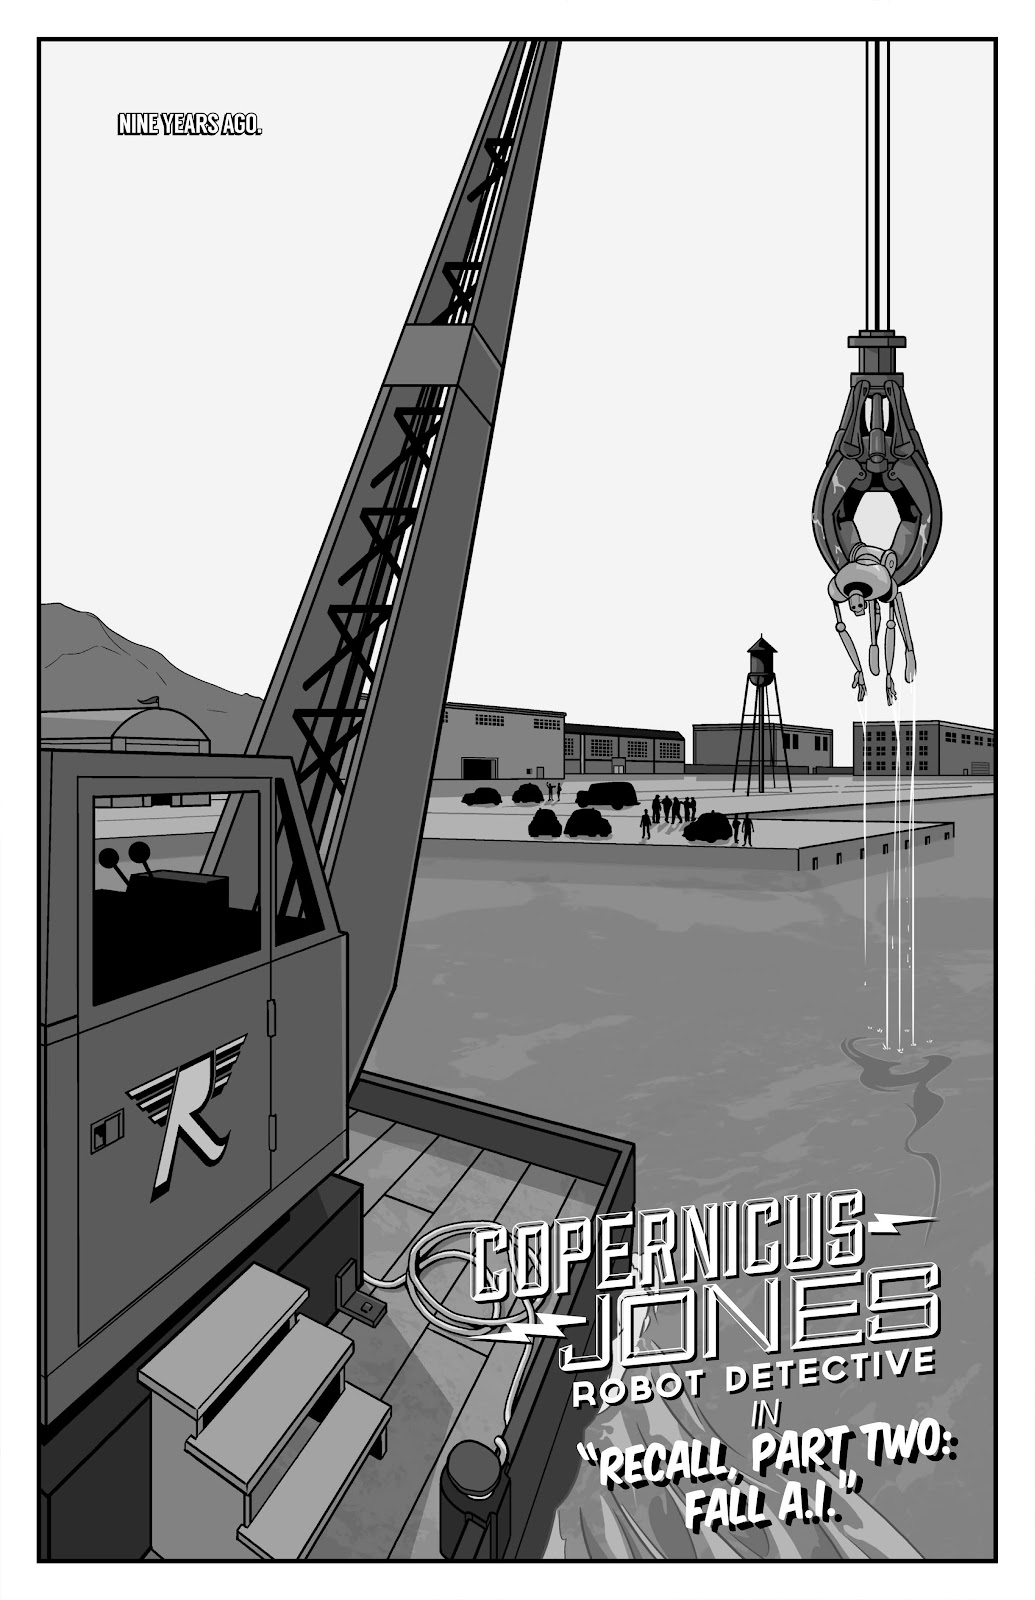 Copernicus Jones: Robot Detective issue 9 - Page 3